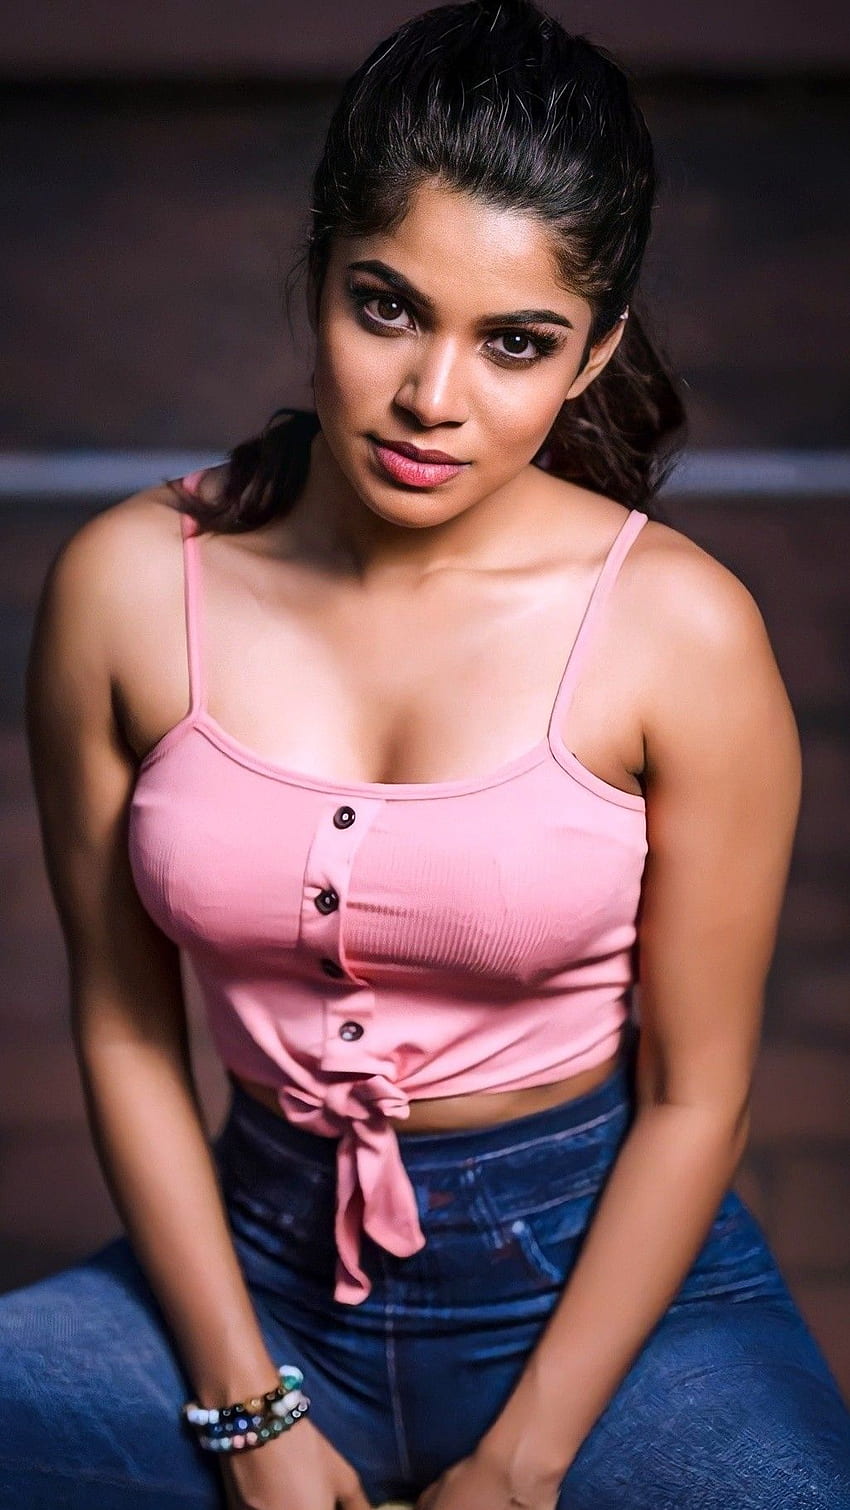 Divya Bharti Bf Video - sudigali sudheer new movie with hot actress divya bharti - Discussions -  Andhrafriends.com